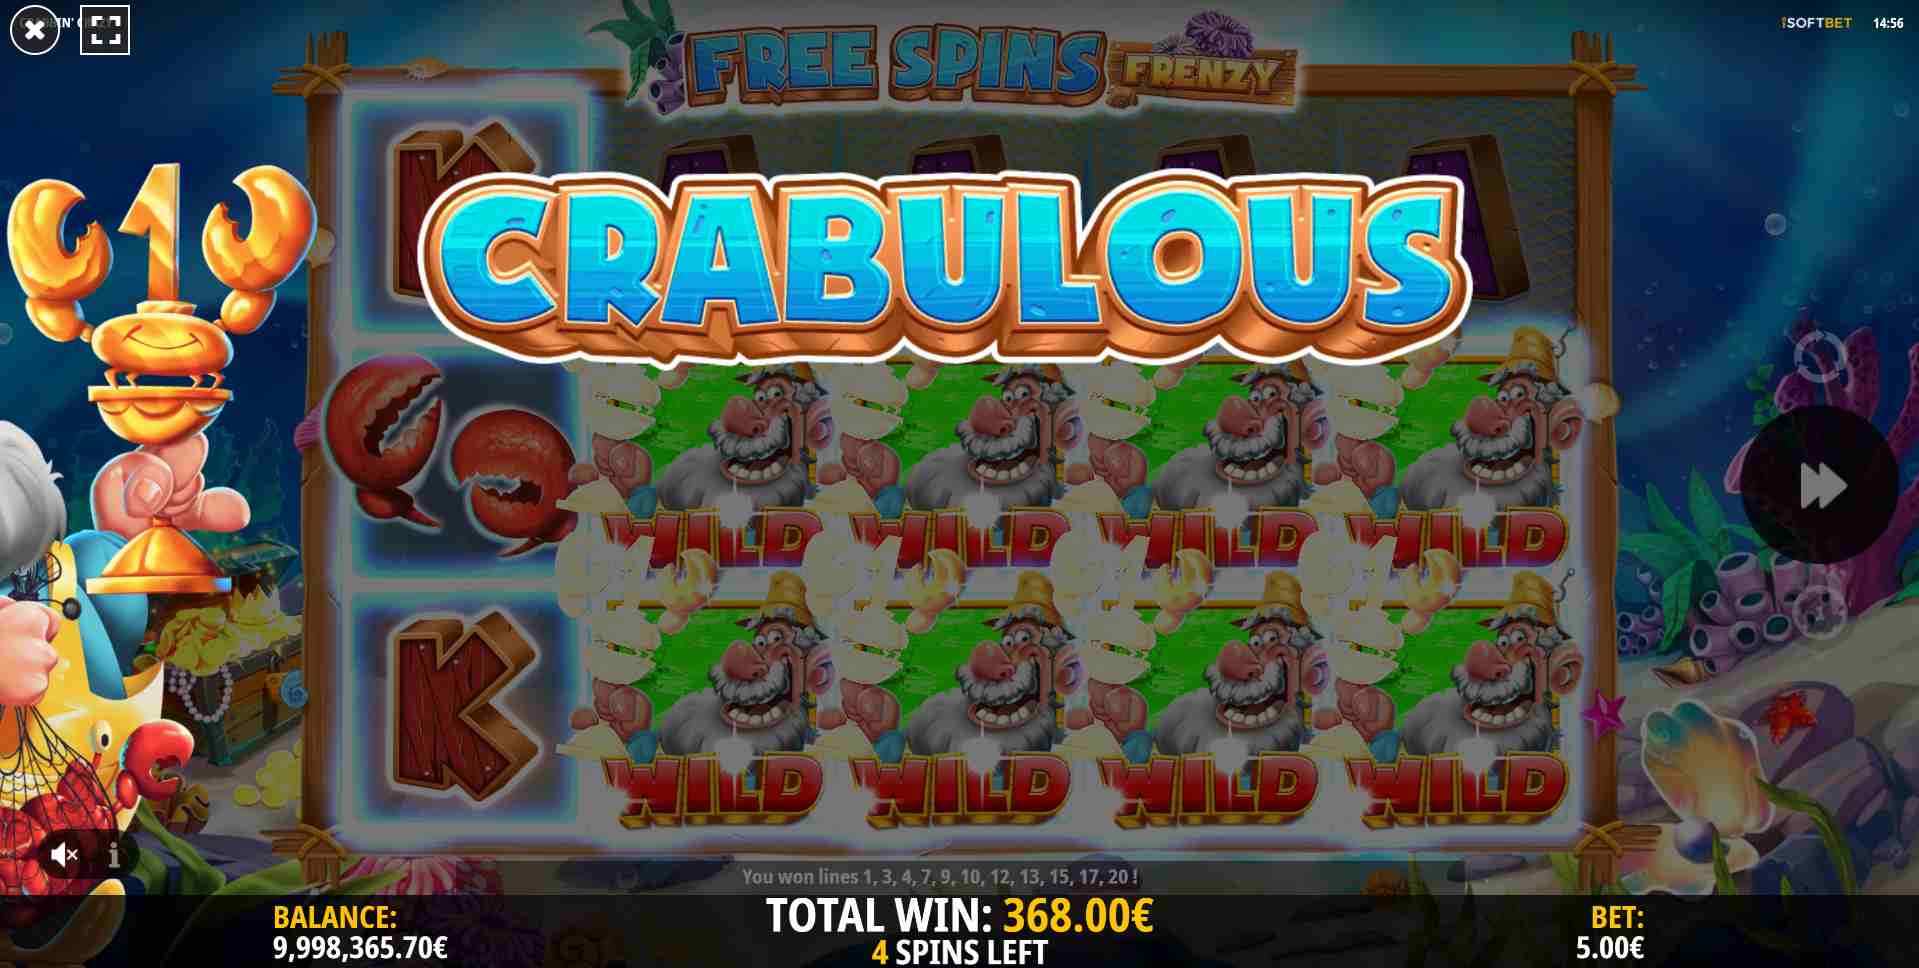 Crabbin' Crazy Free Spins Frenzy